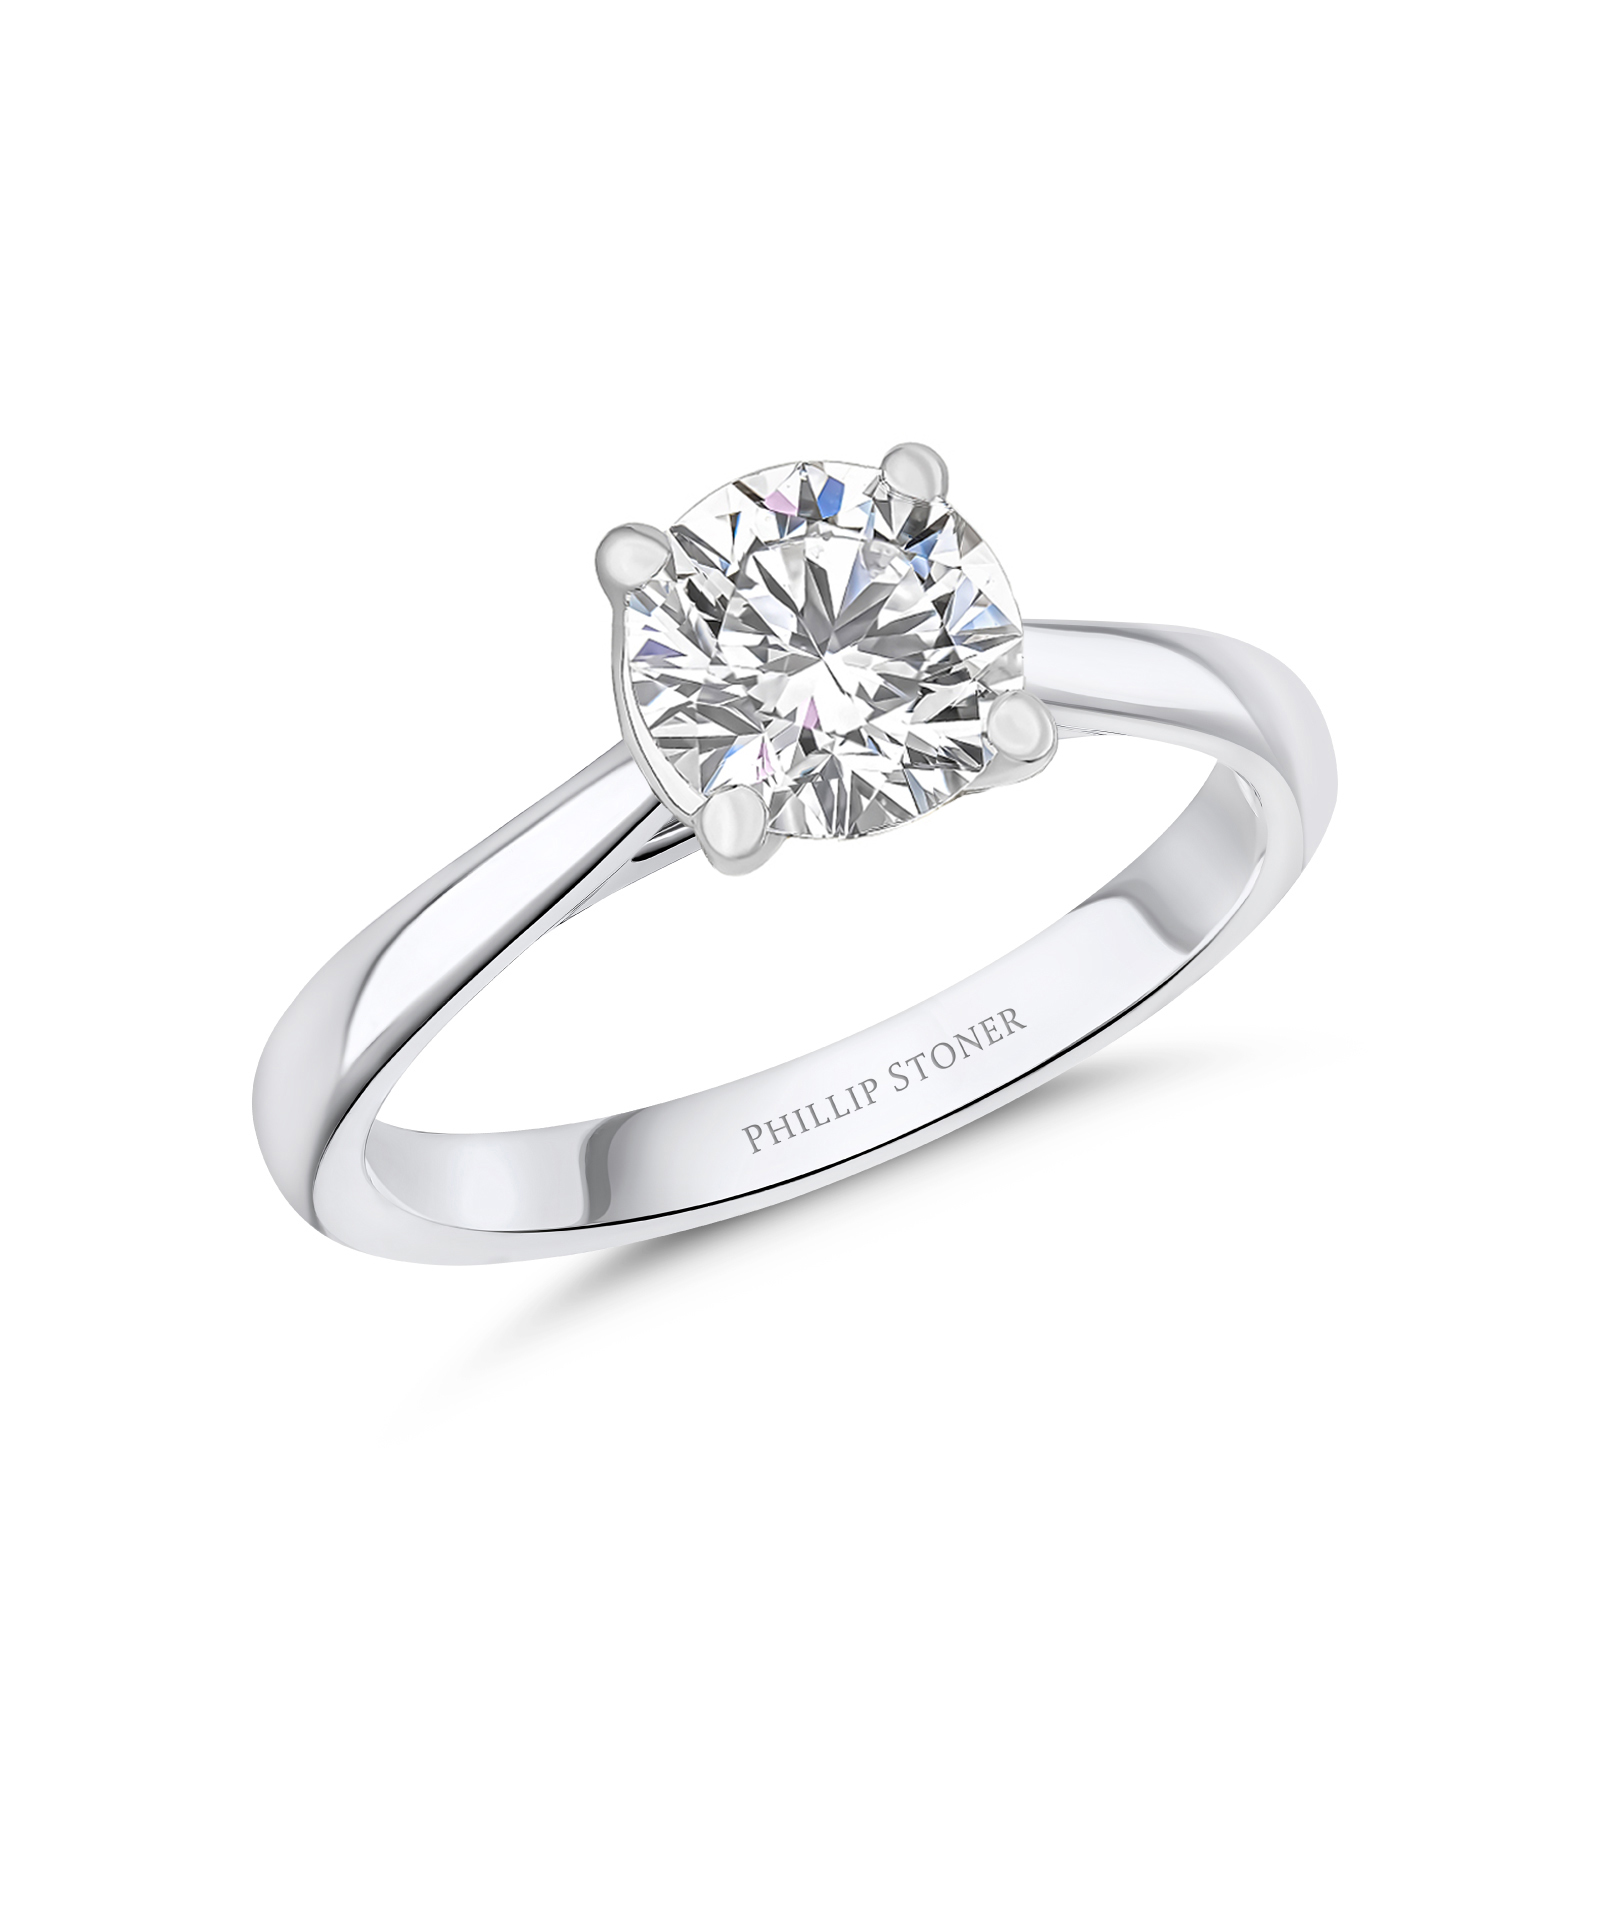 1.20ct Round Brilliant Cut Diamond Single Stone Engagement Ring - Phillip Stoner The Jeweller